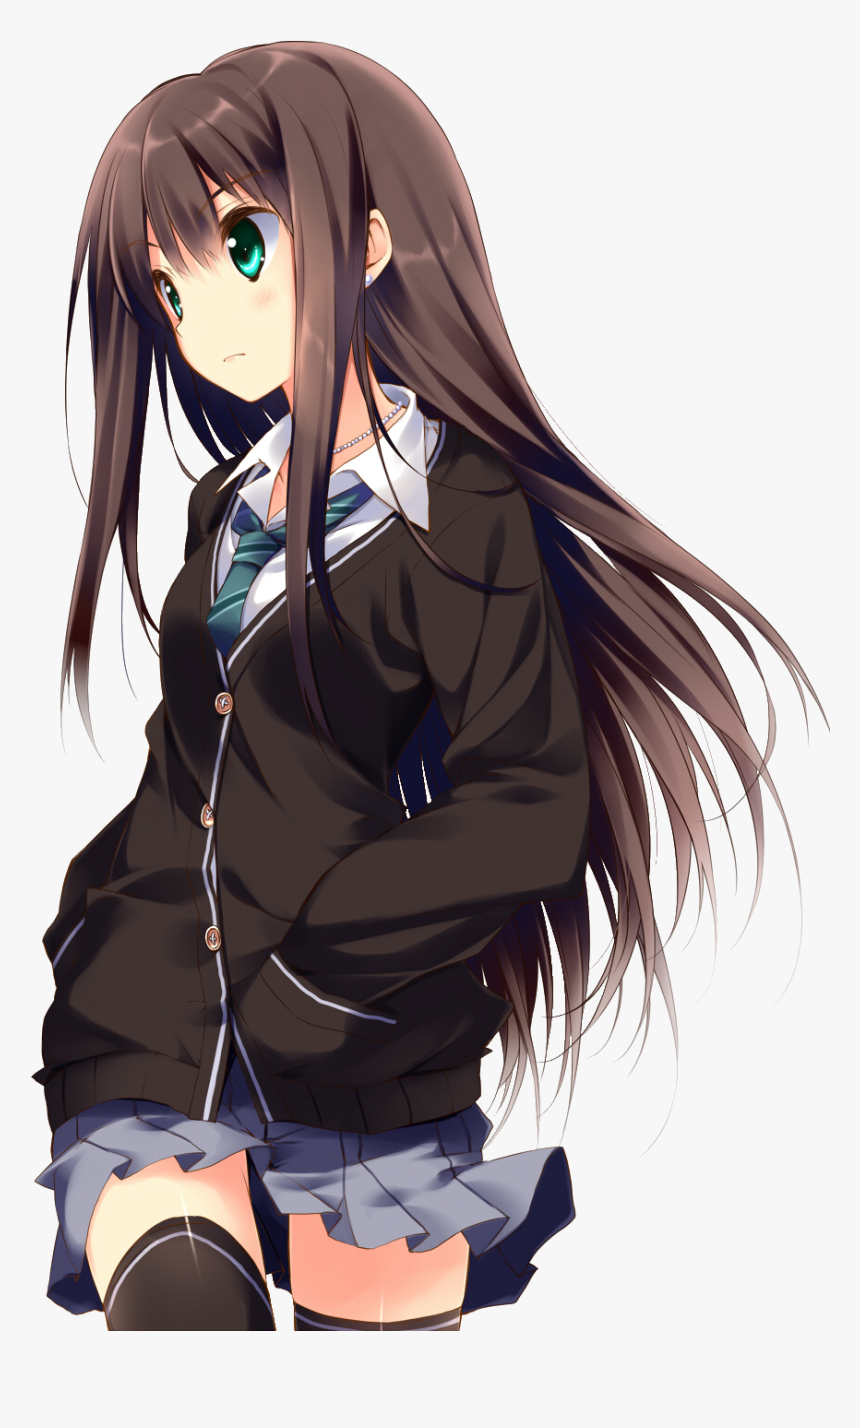 Anime Girl With Brown Hair And B